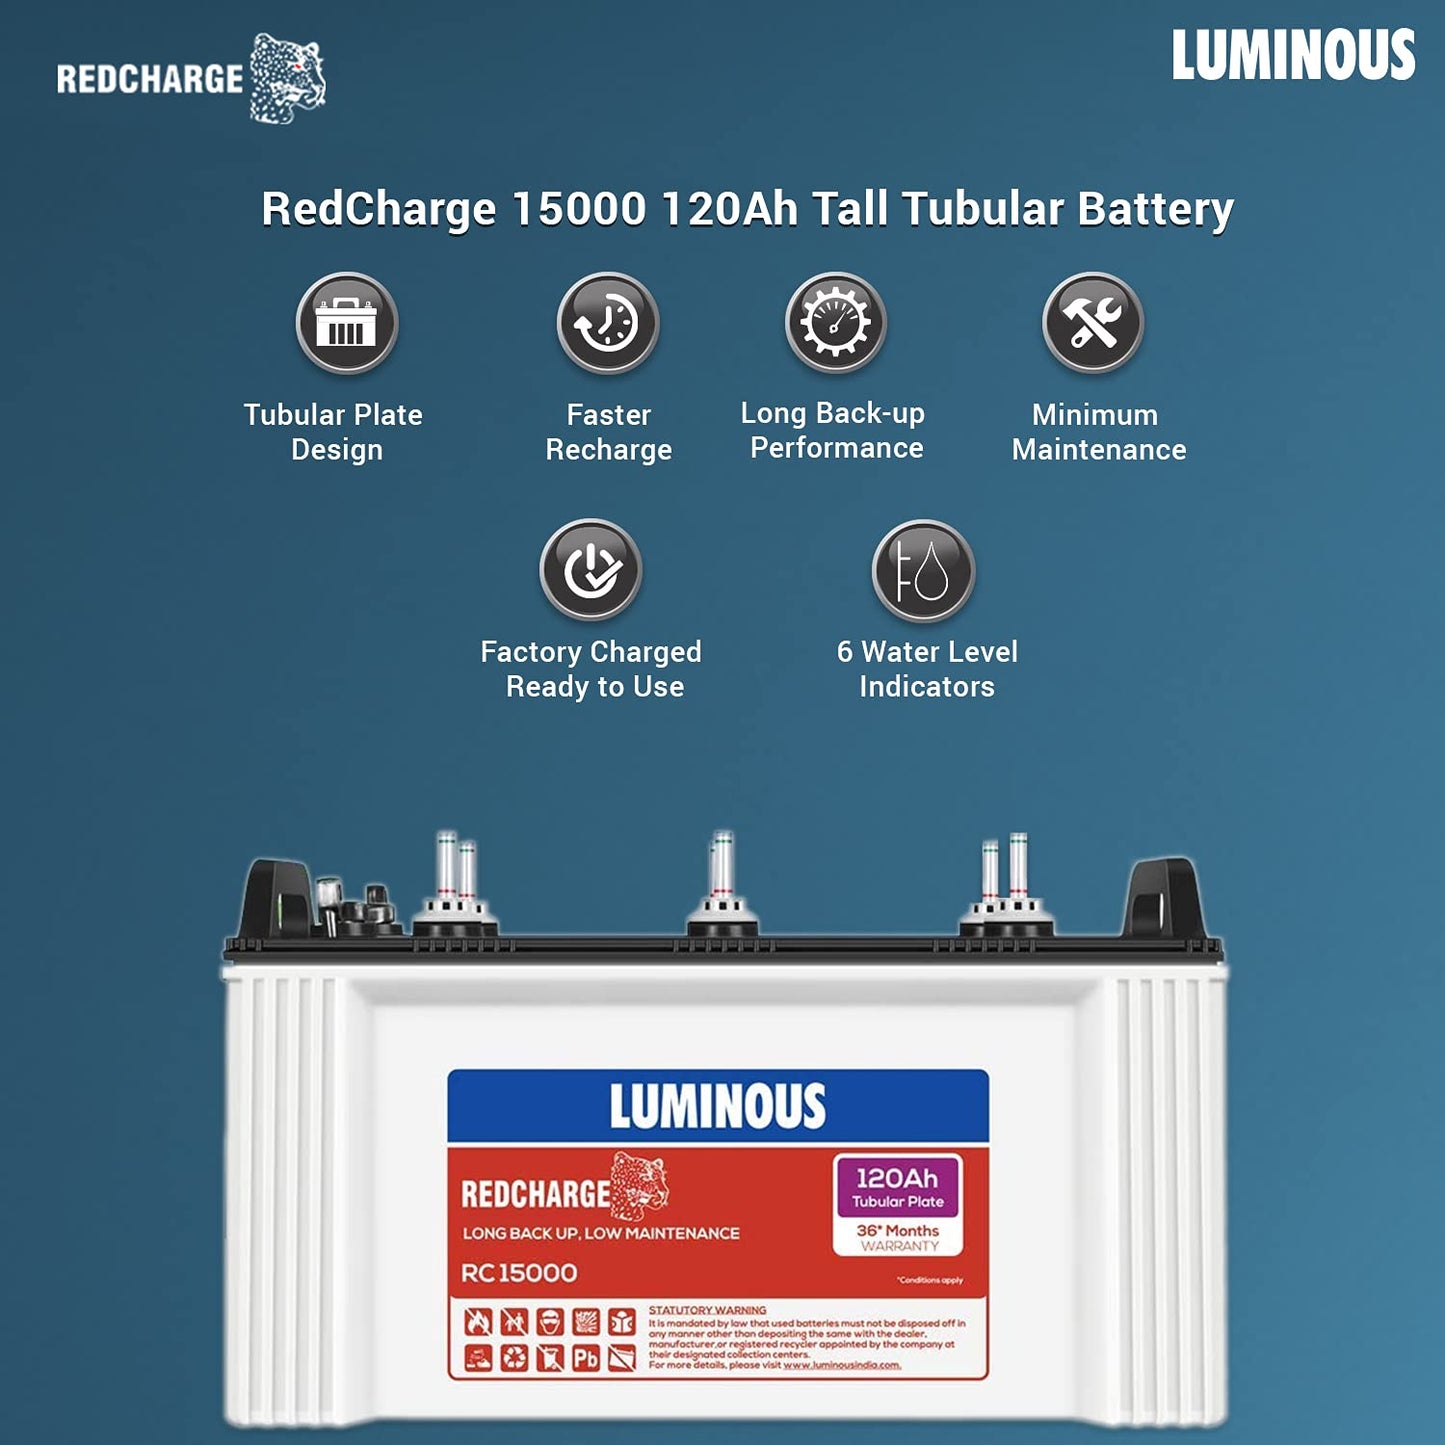 Luminous RC15000 Tubular Inverter Battery 120Ah Warranty 36 Months 1BHK